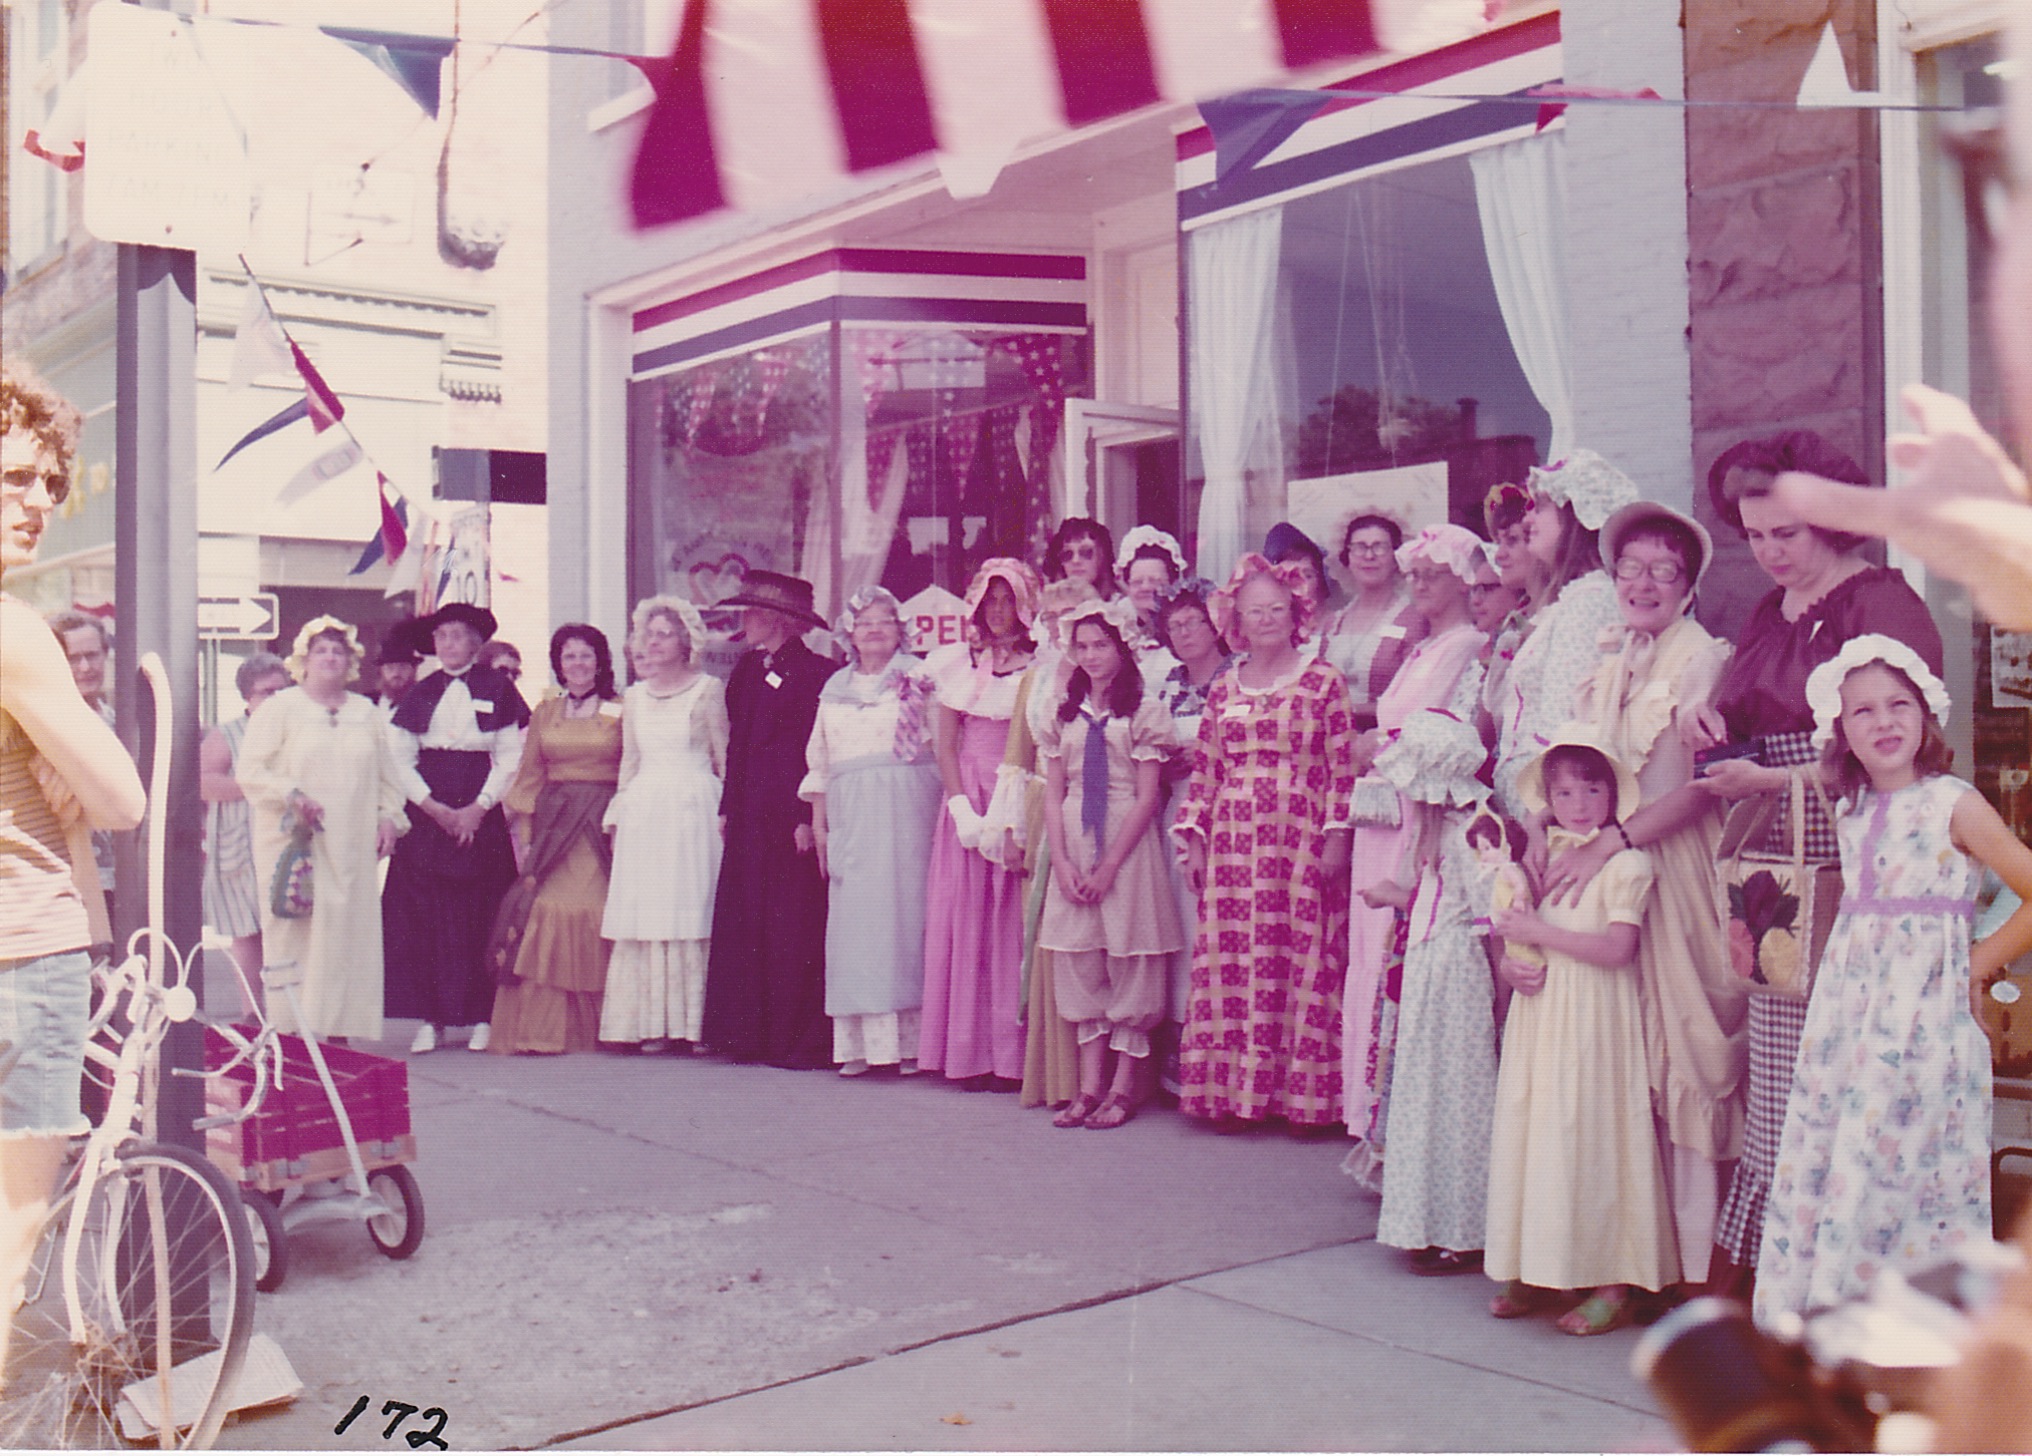 Bicentennial Costume Contest, July 1976.